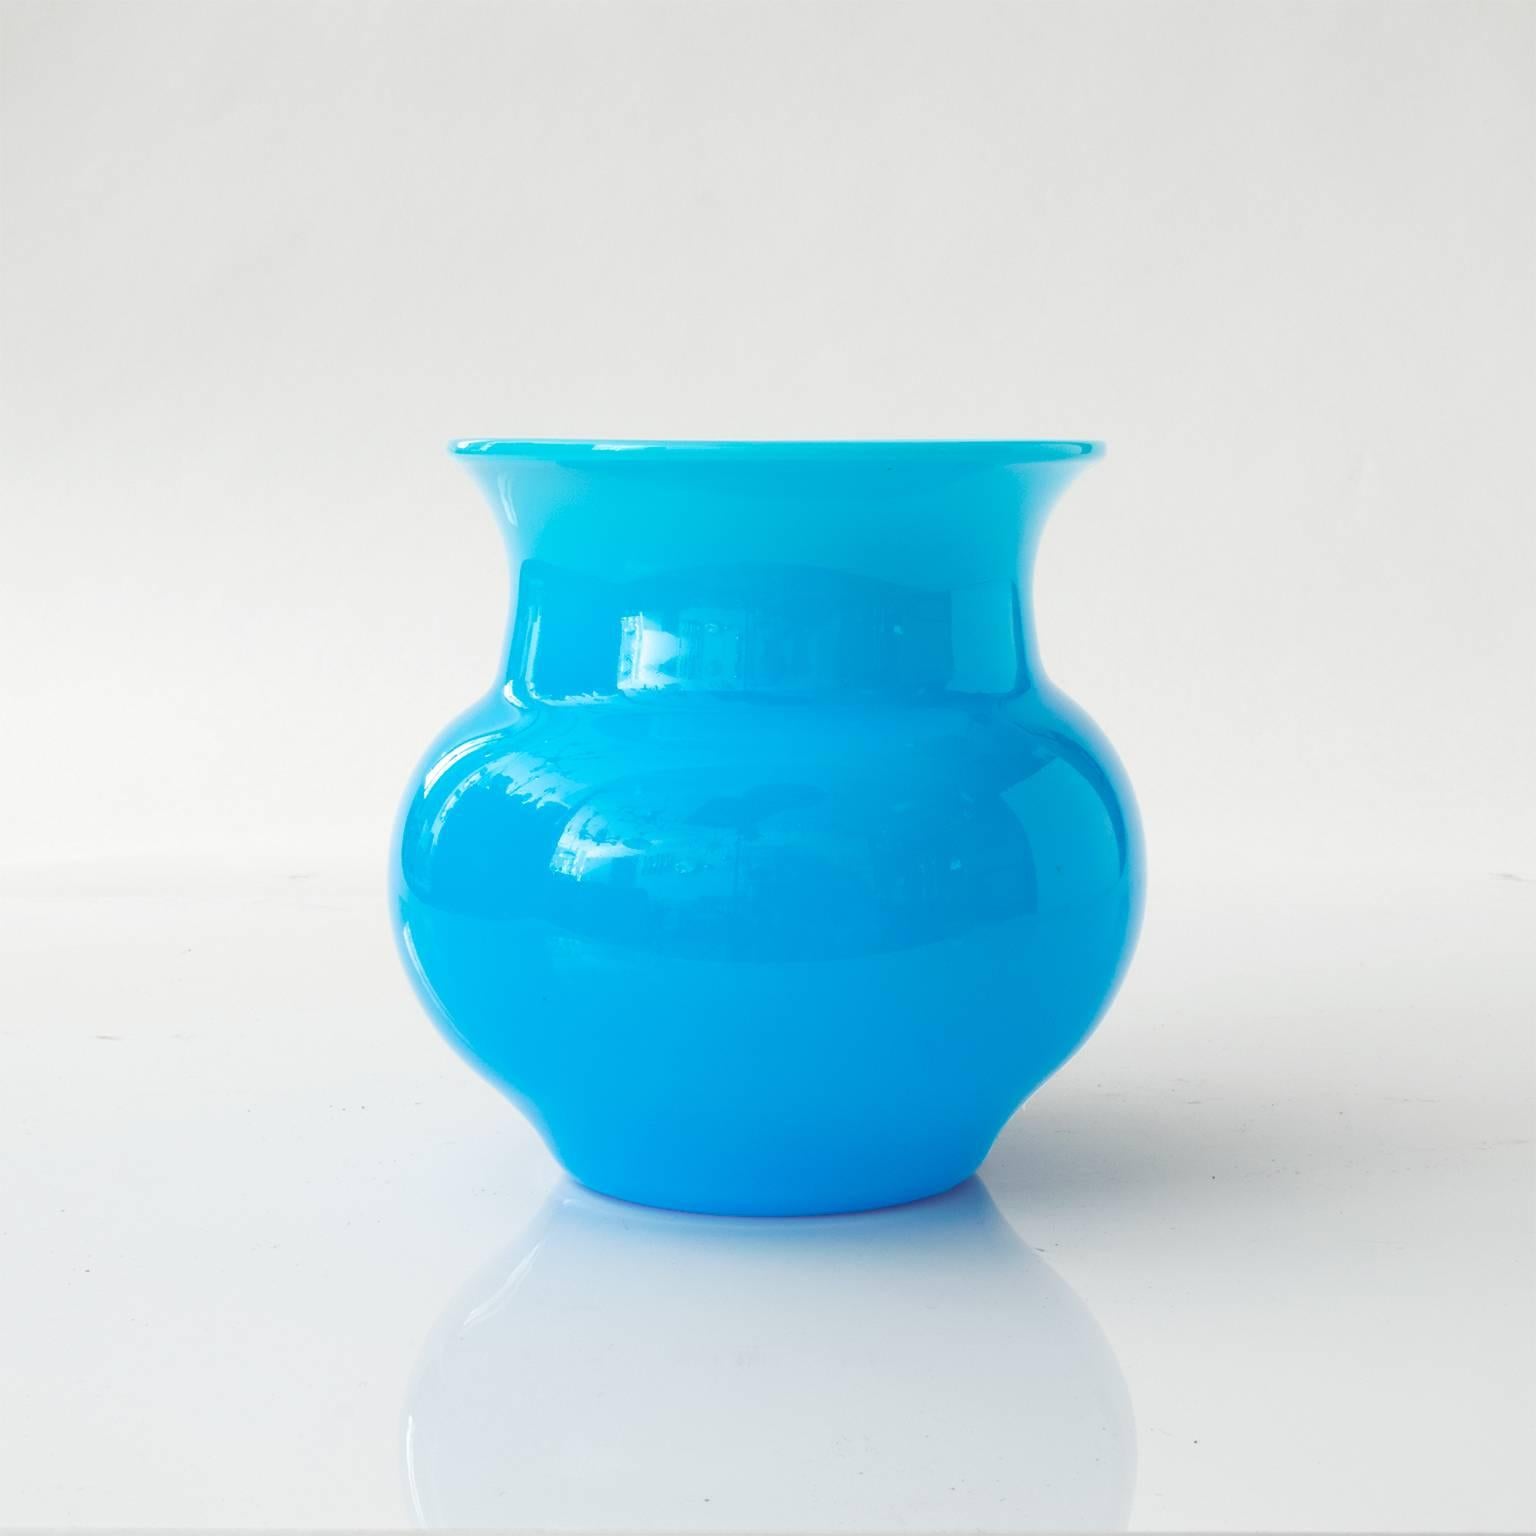 Erik Hogllund vibrant blue handblown glass vase for the Boda Glassworks, Sweden, circa 1960s.
Measures: Height 6.75", diameter: 7".